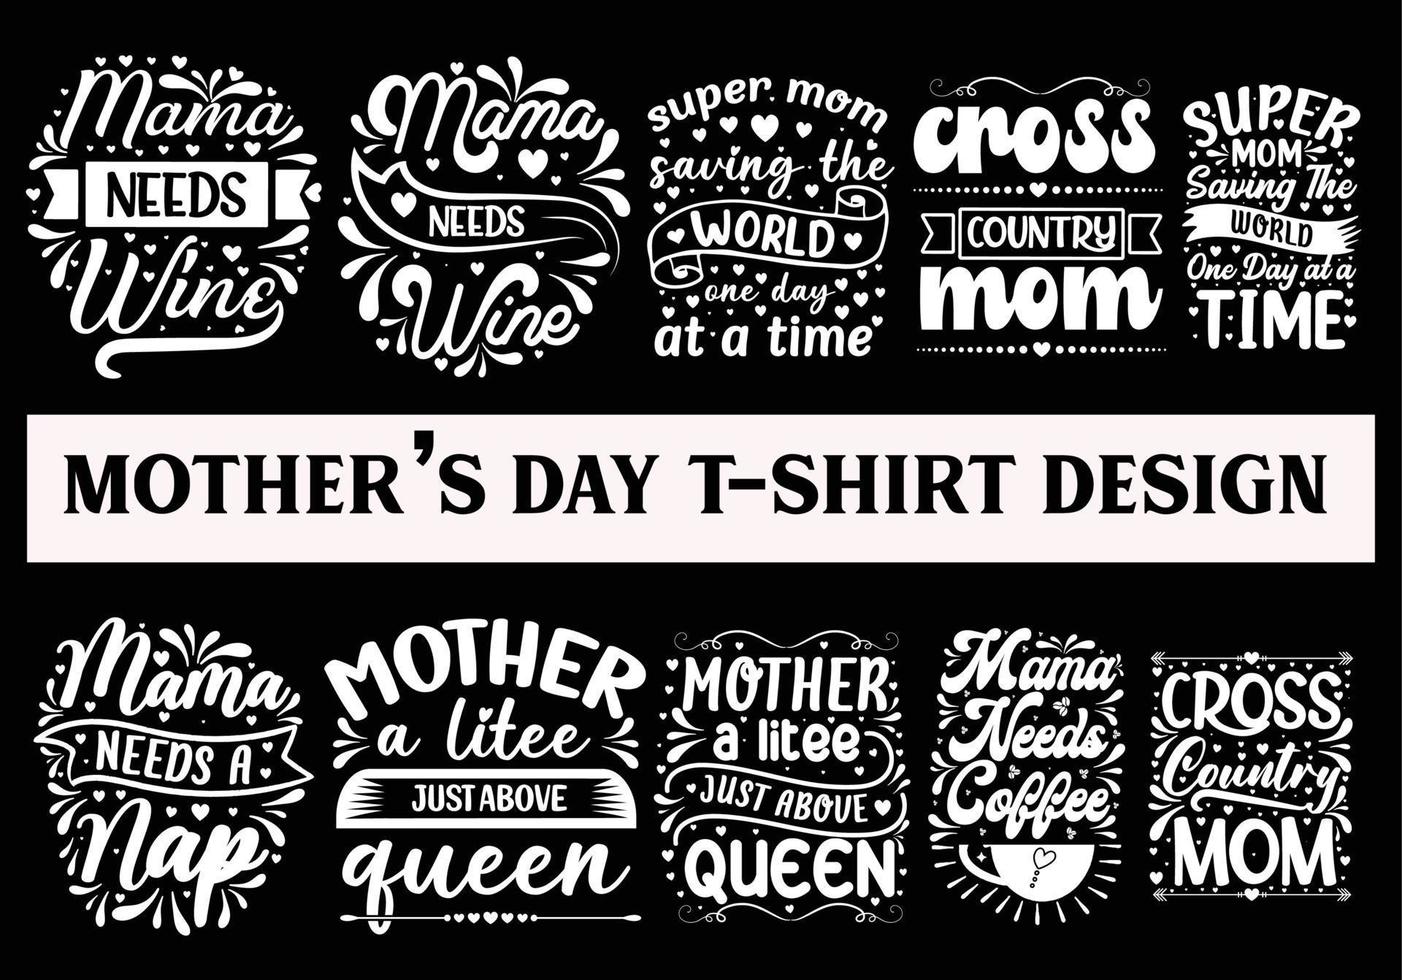 mödrar dag t skjorta bunt fri, text mamma tshirt uppsättning, mamma tshirt Citat, mamma tshirt vektor, mödrar dag t skjorta design aning, mamma t skjorta skriva ut design, färgrik mamma t skjorta vektor